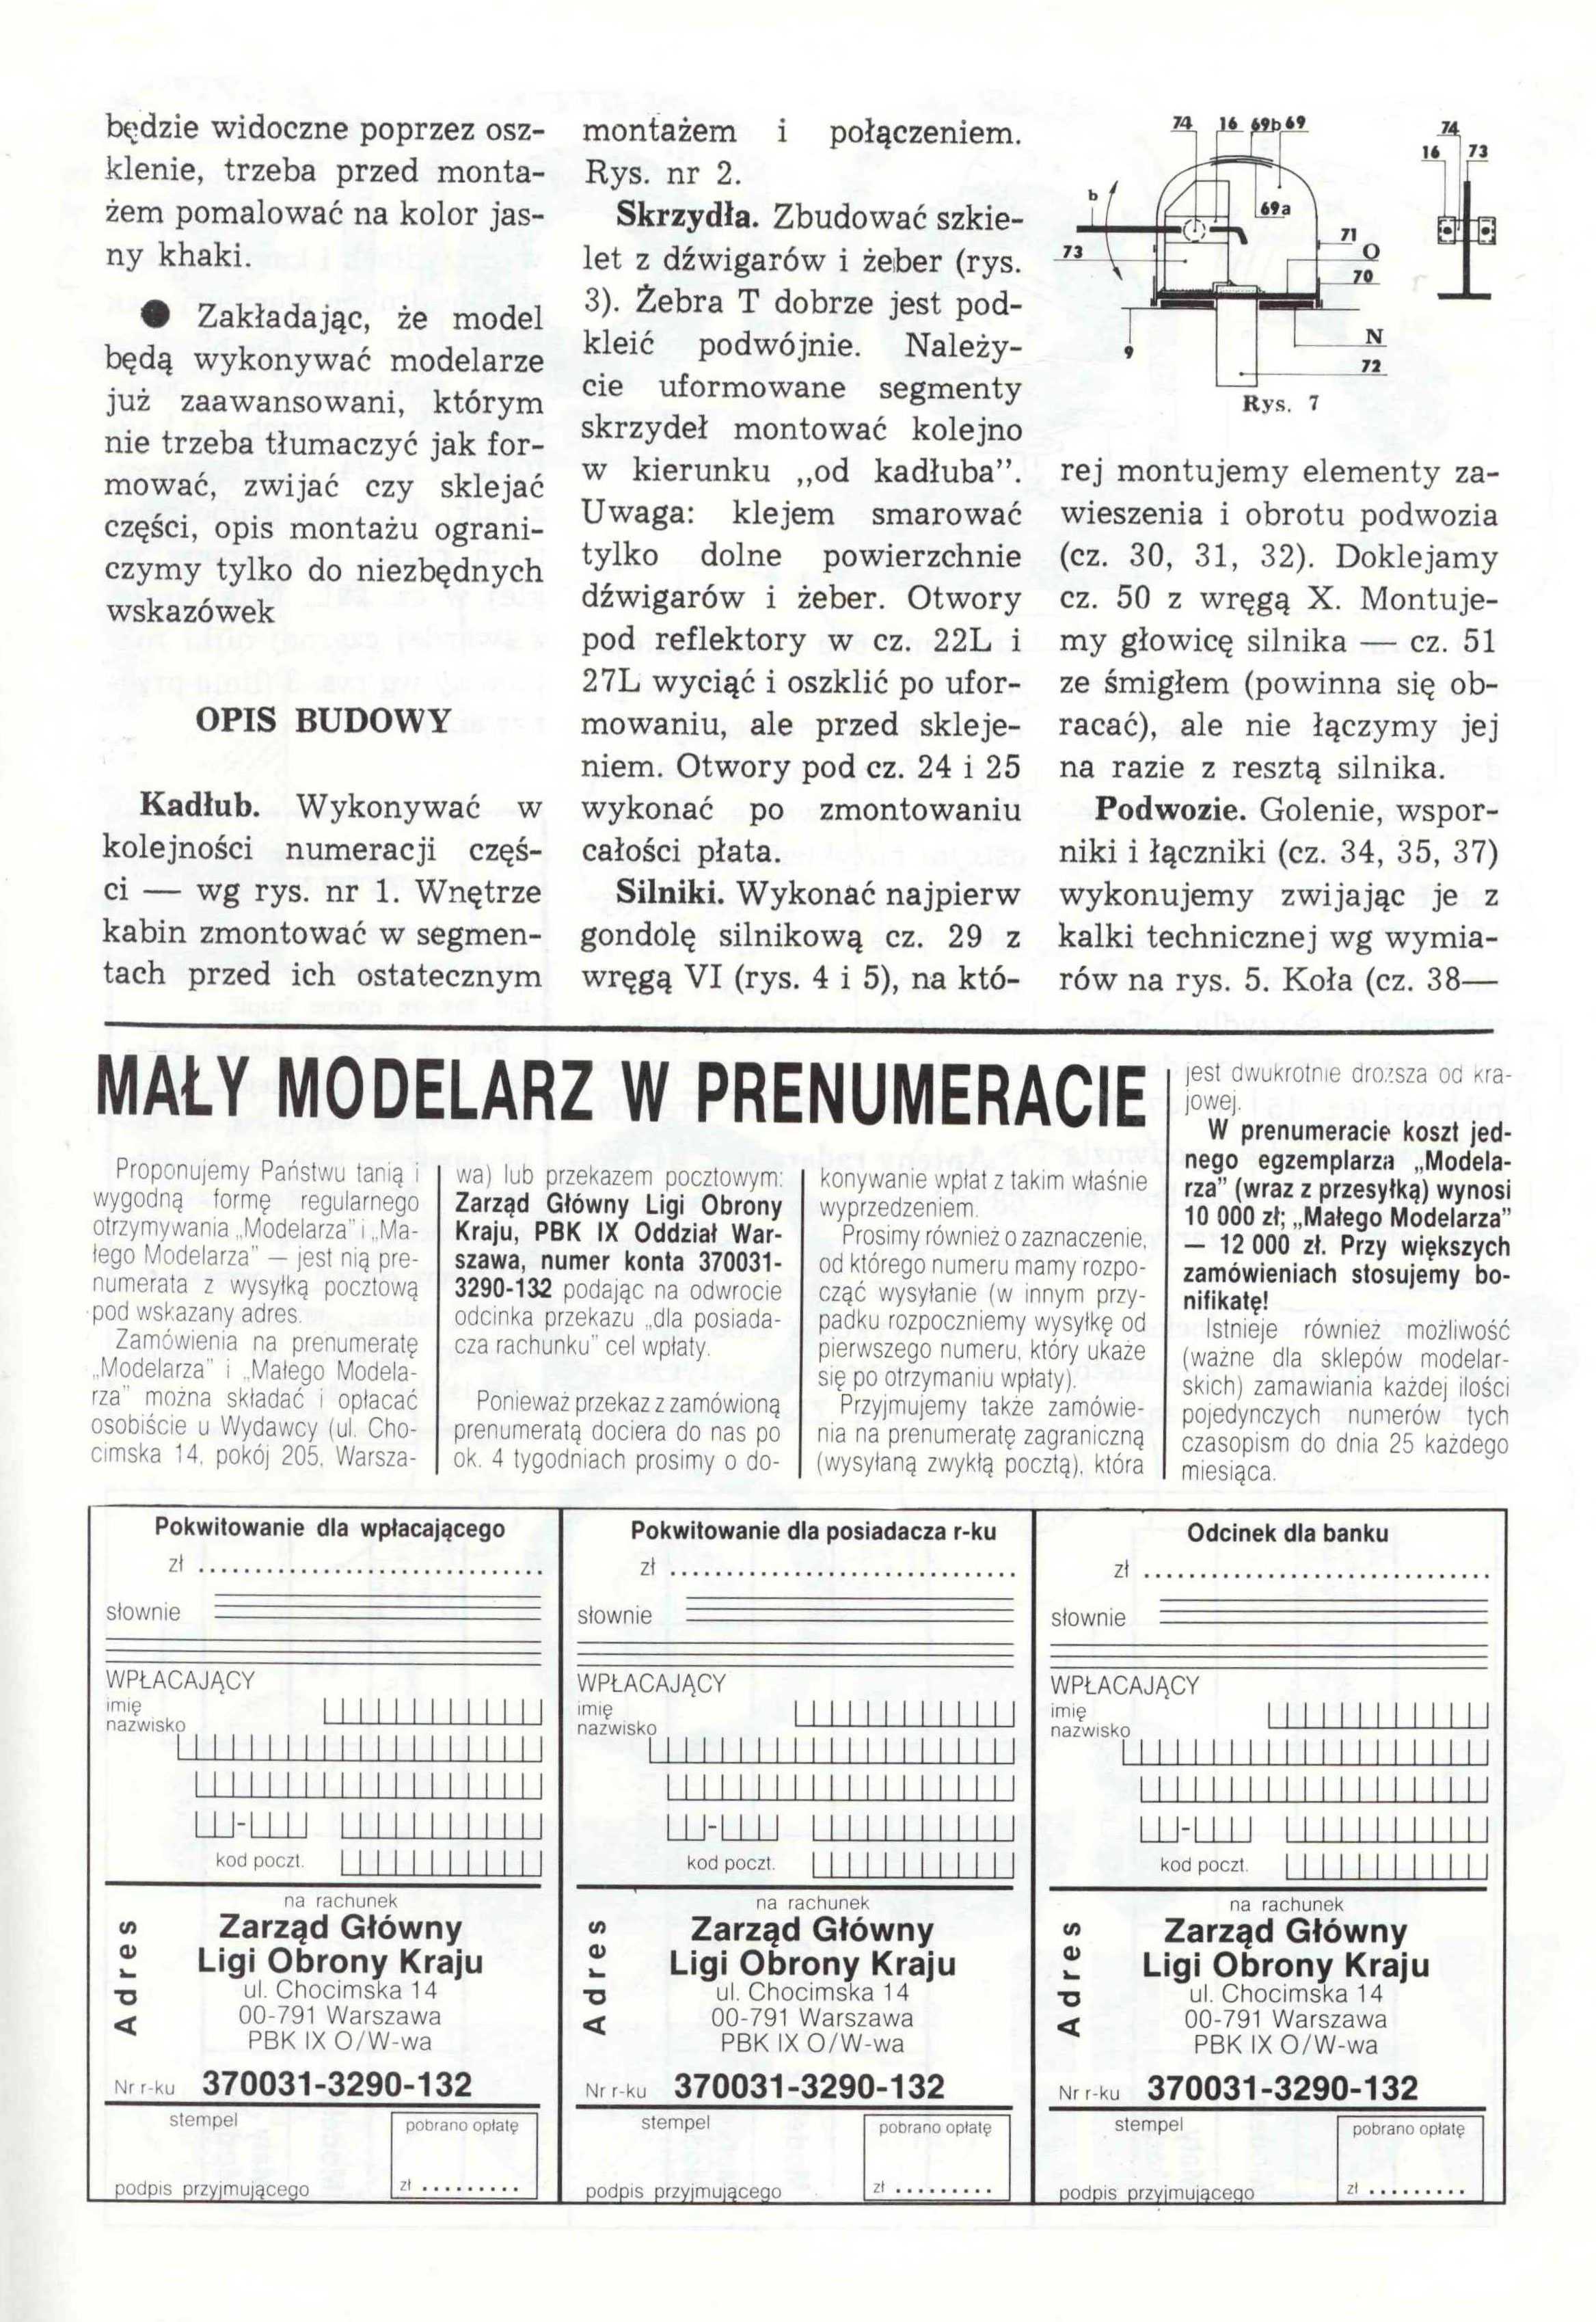 "Maly Modelarz" 7-8, 1993, 7 c.